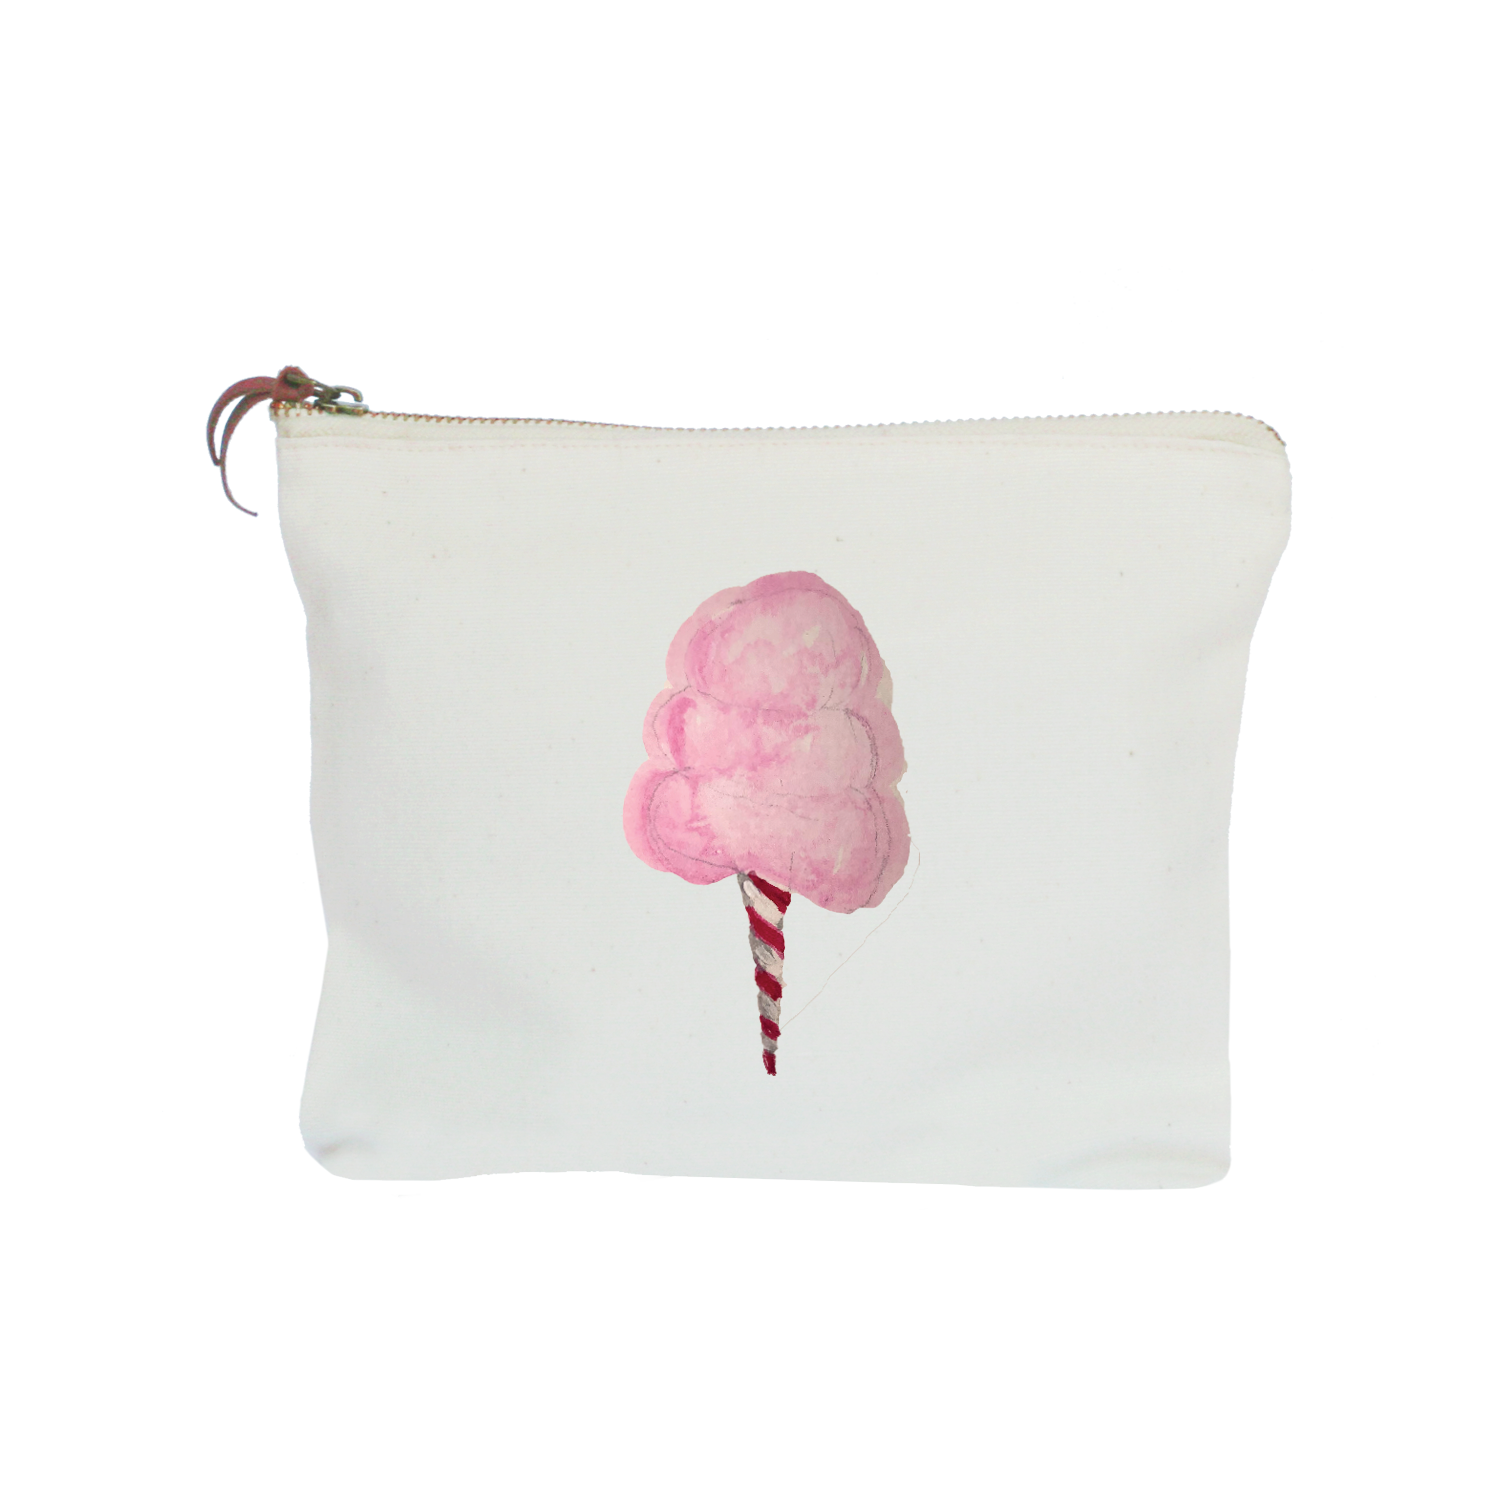 cotton candy zipper pouch